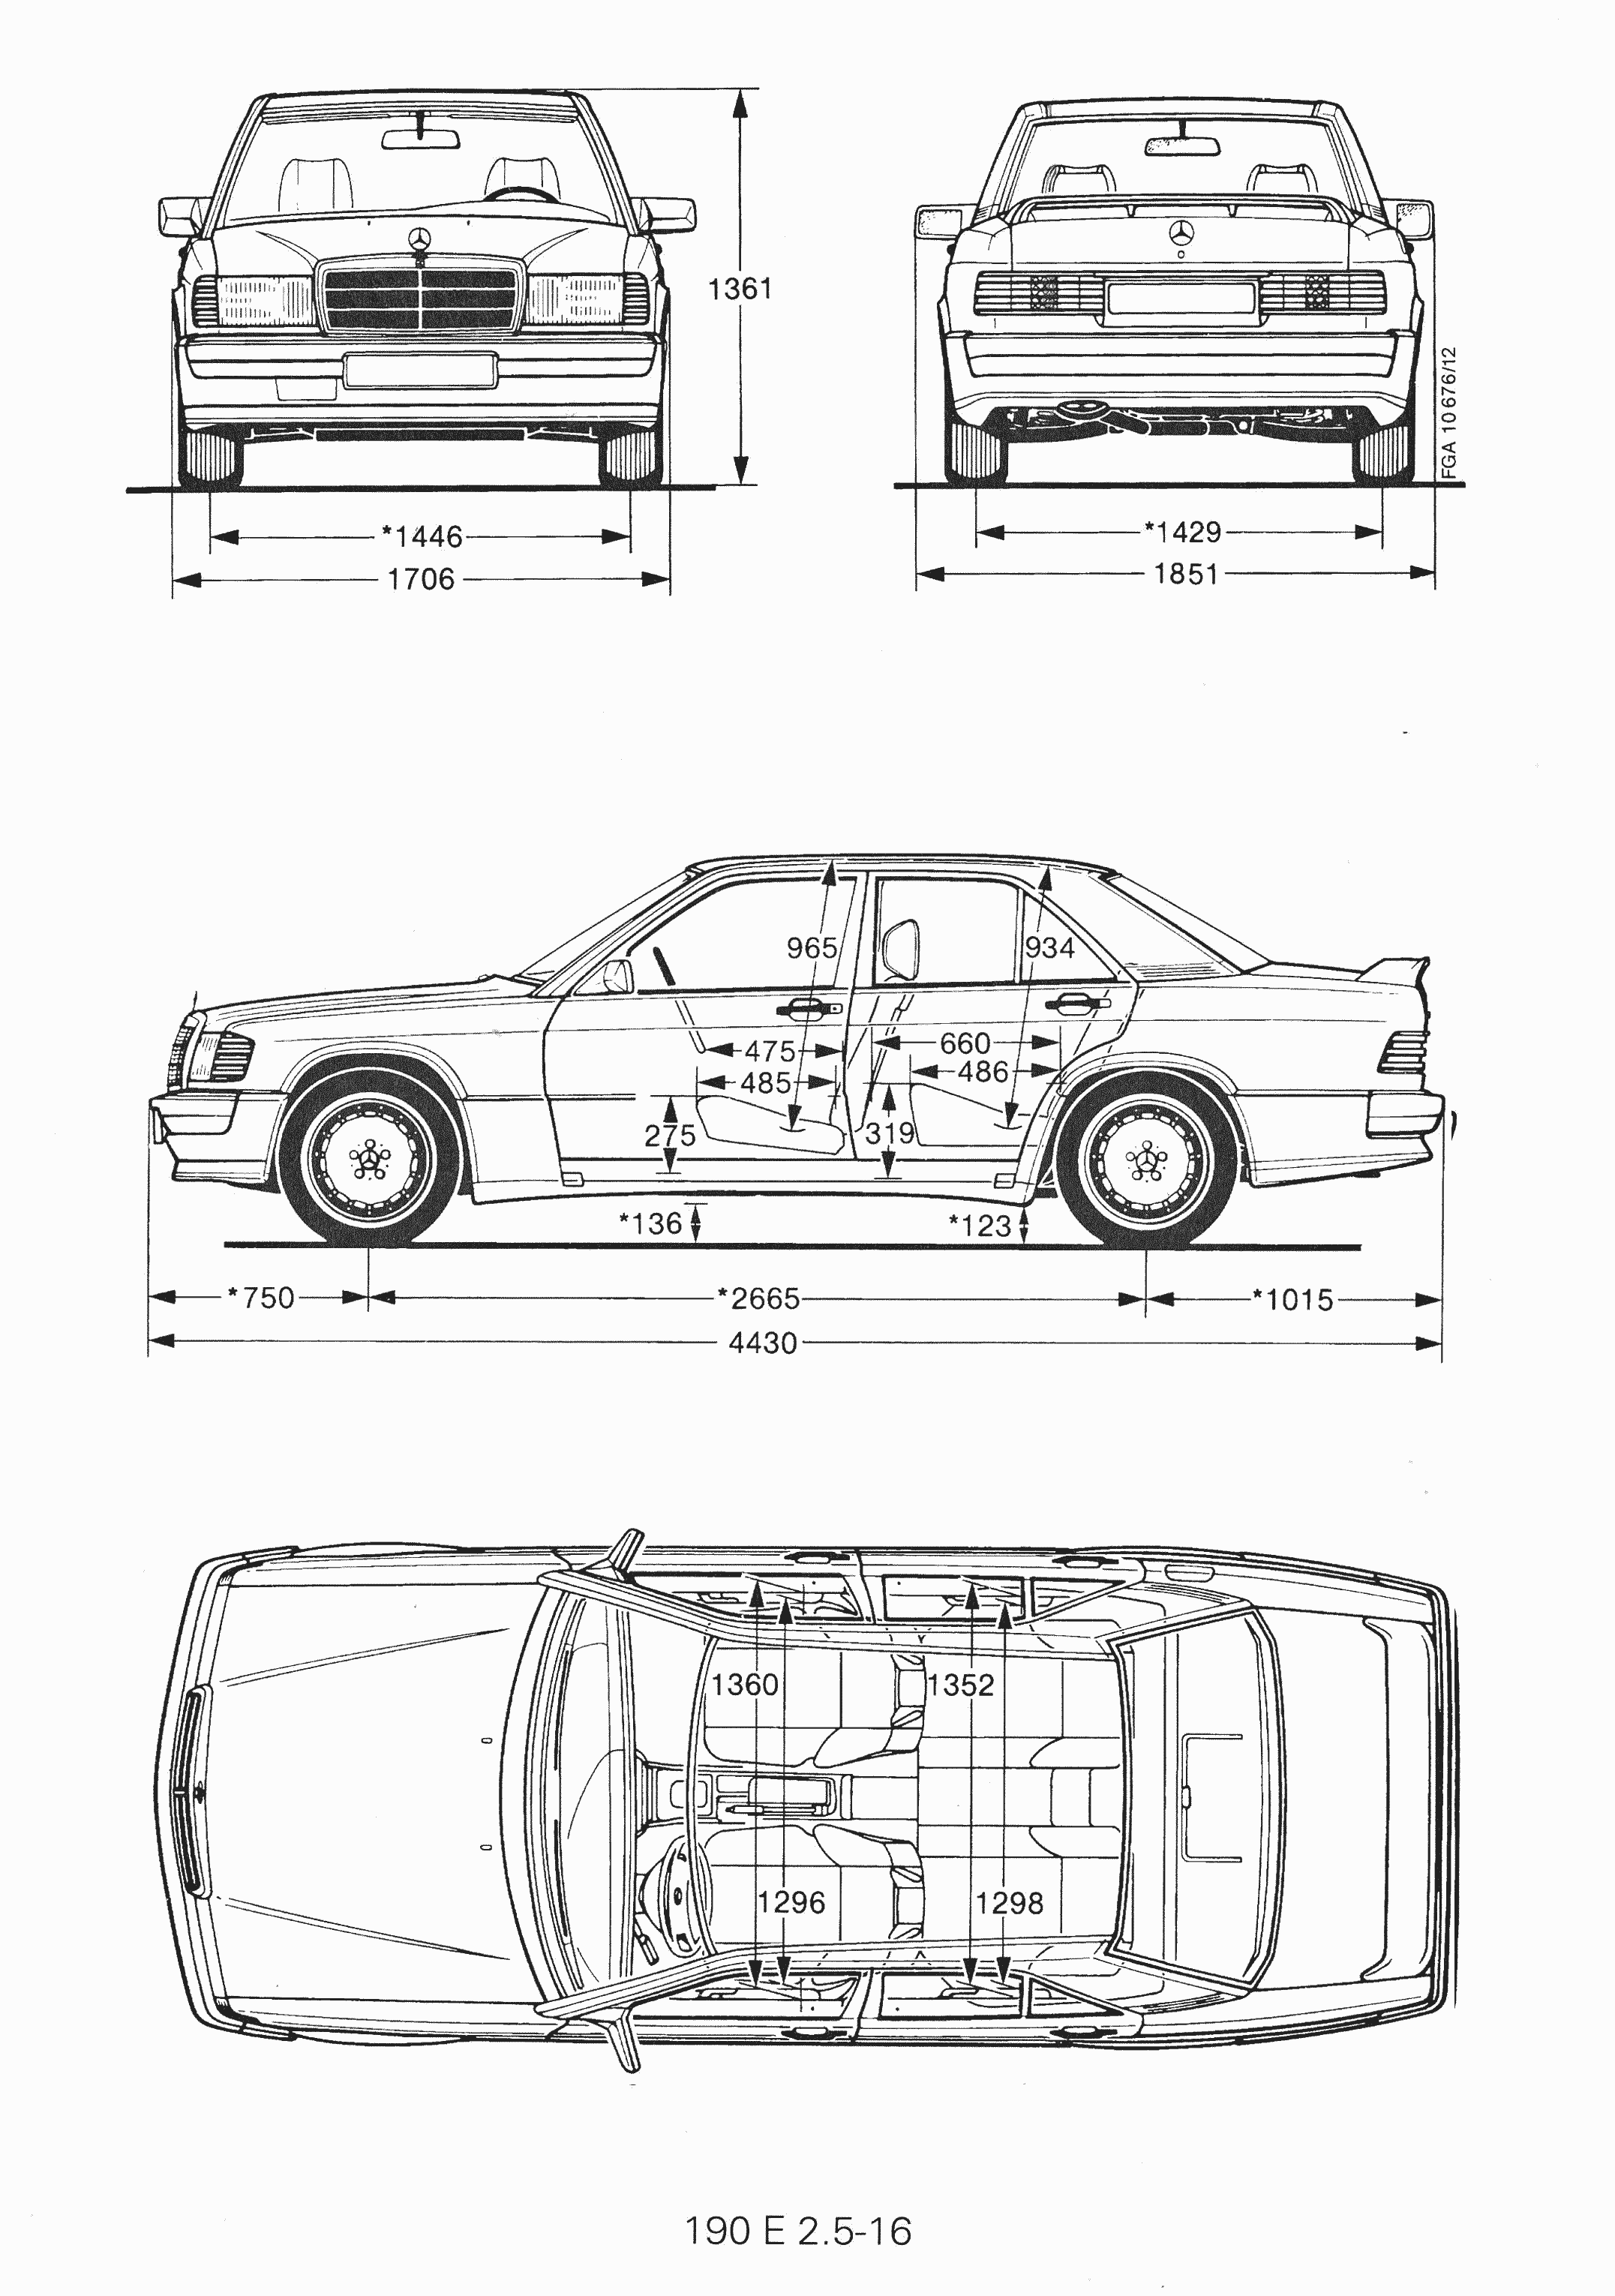 Mercedes-Benz W201 blueprint